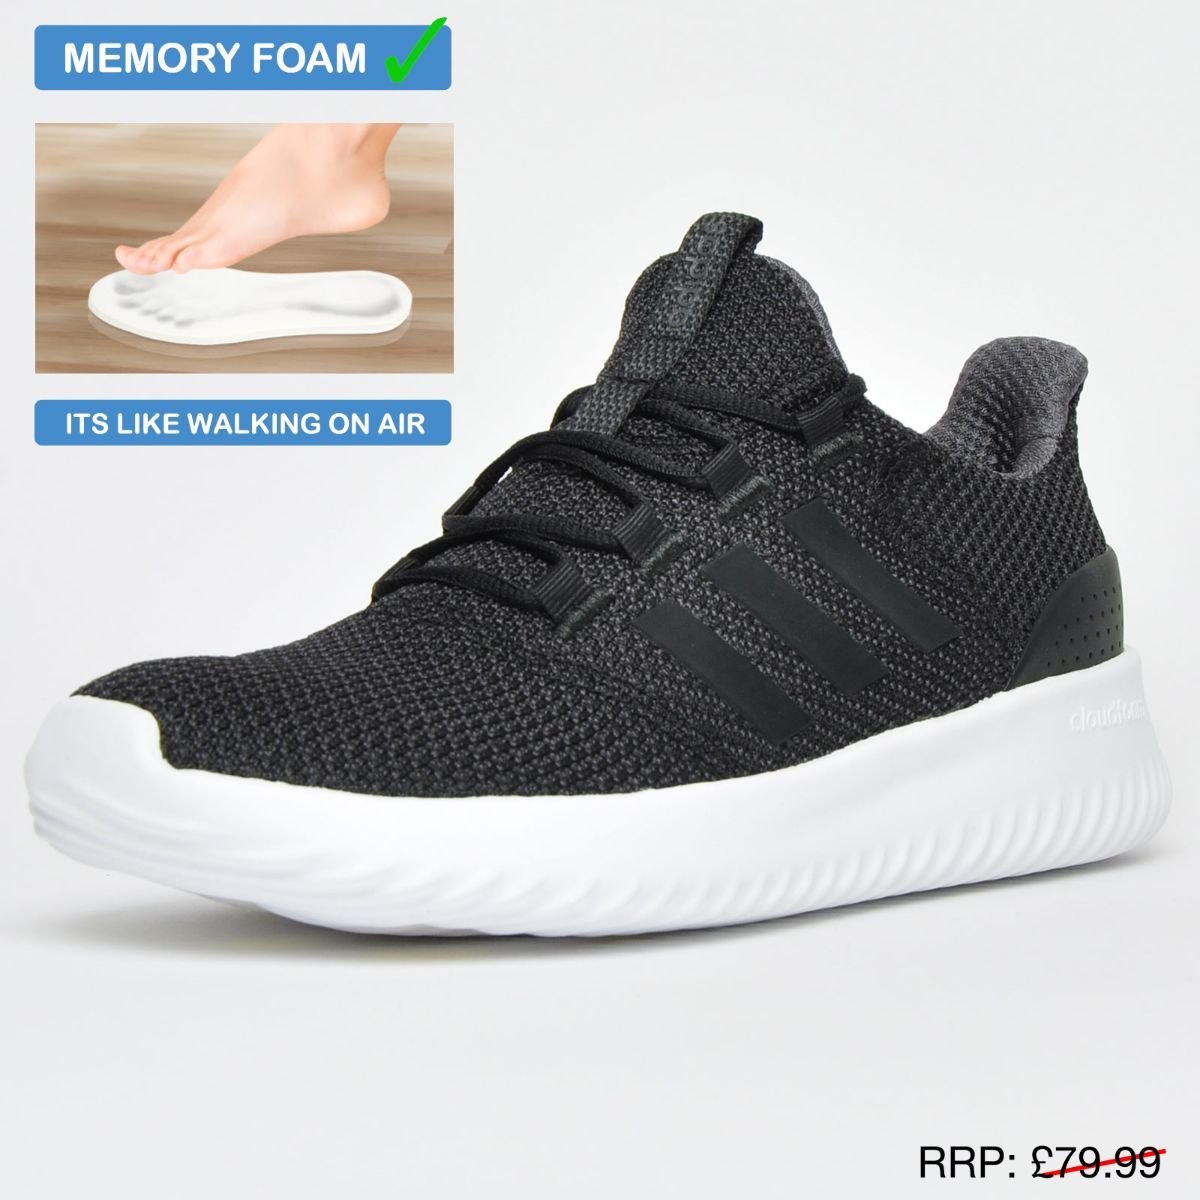 memory foam trainers adidas